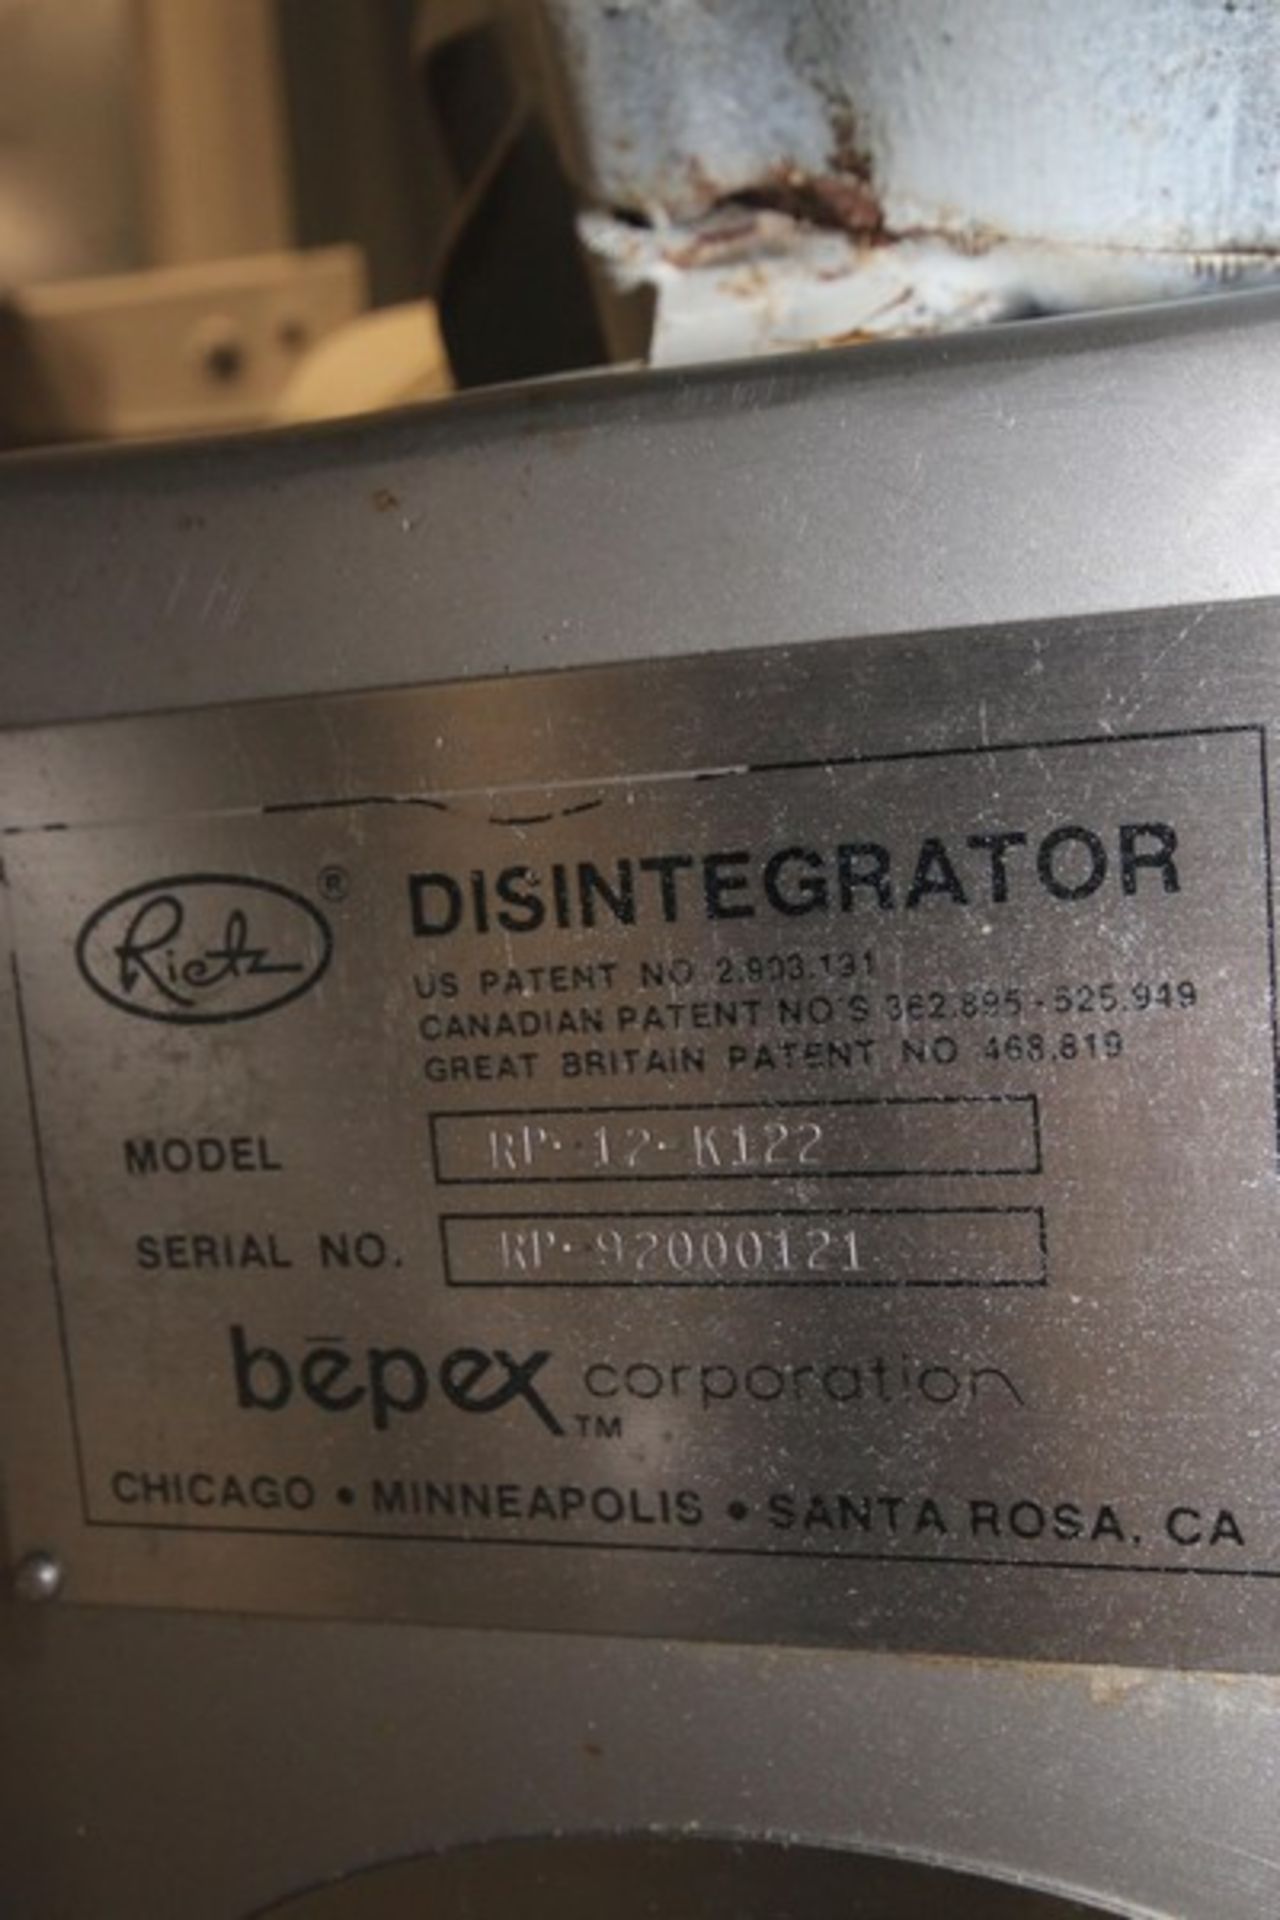 Rietz S/S Disintegrator, M/N RP-12-K122, S/N RP-92000121, with Baldor 15 hp Motor, 1760 RPM, 230/460 - Image 13 of 13